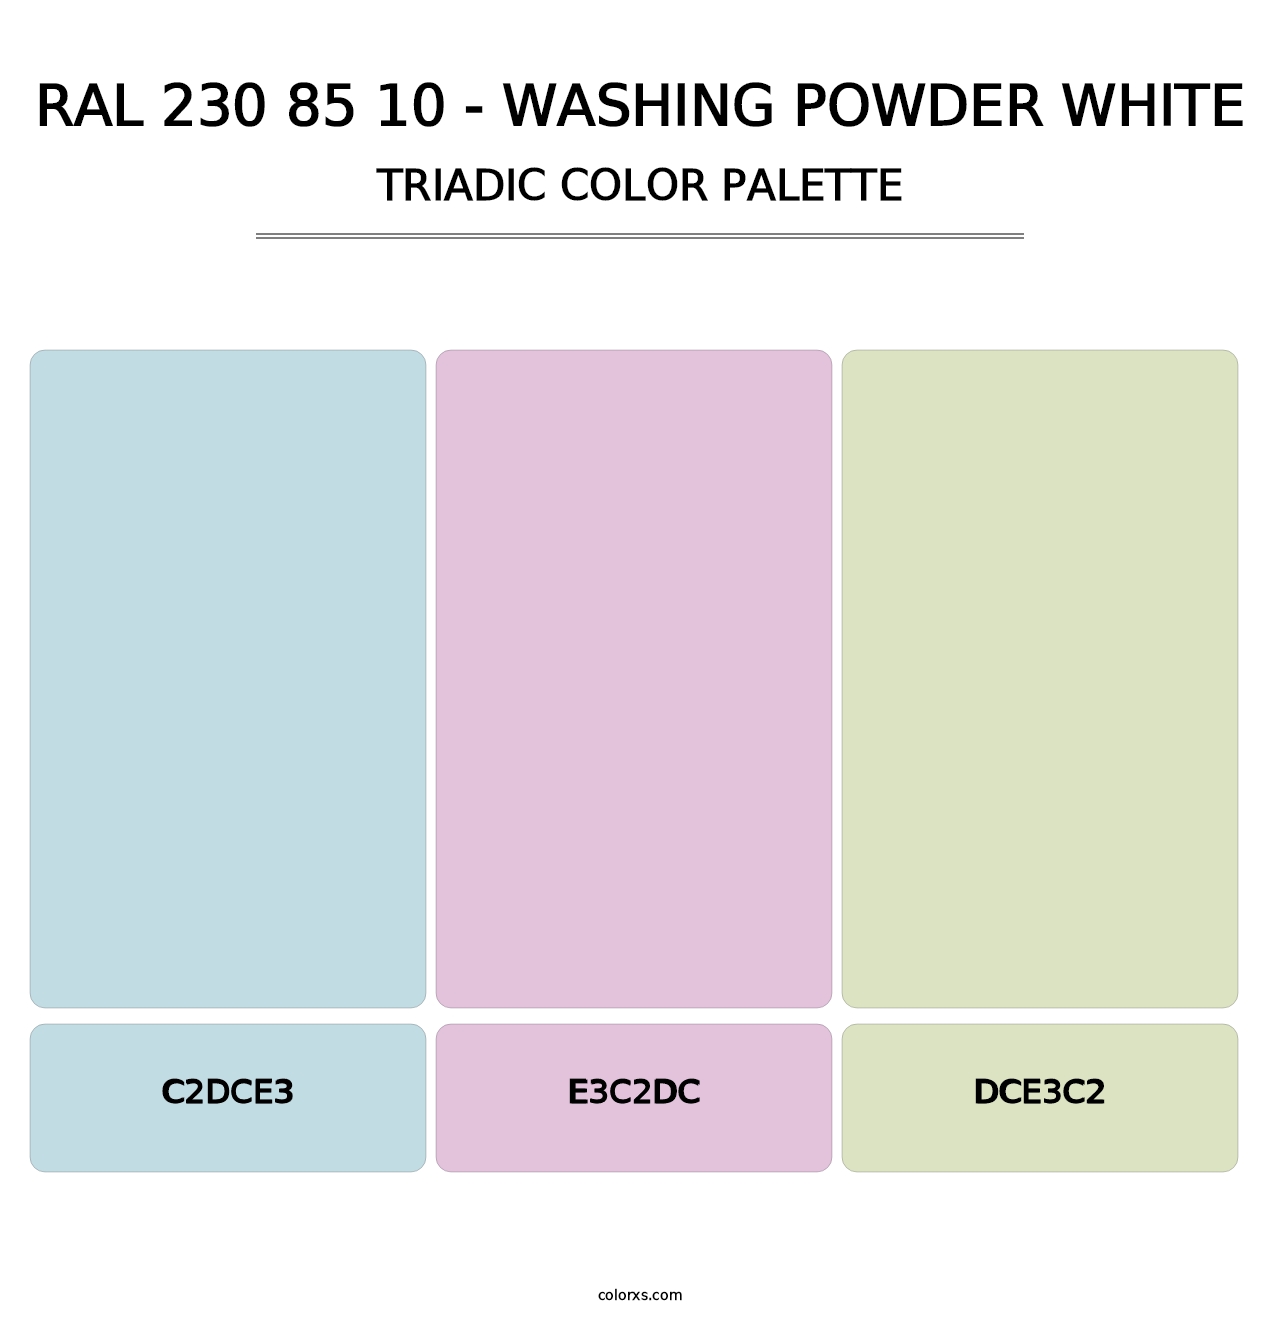 RAL 230 85 10 - Washing Powder White - Triadic Color Palette